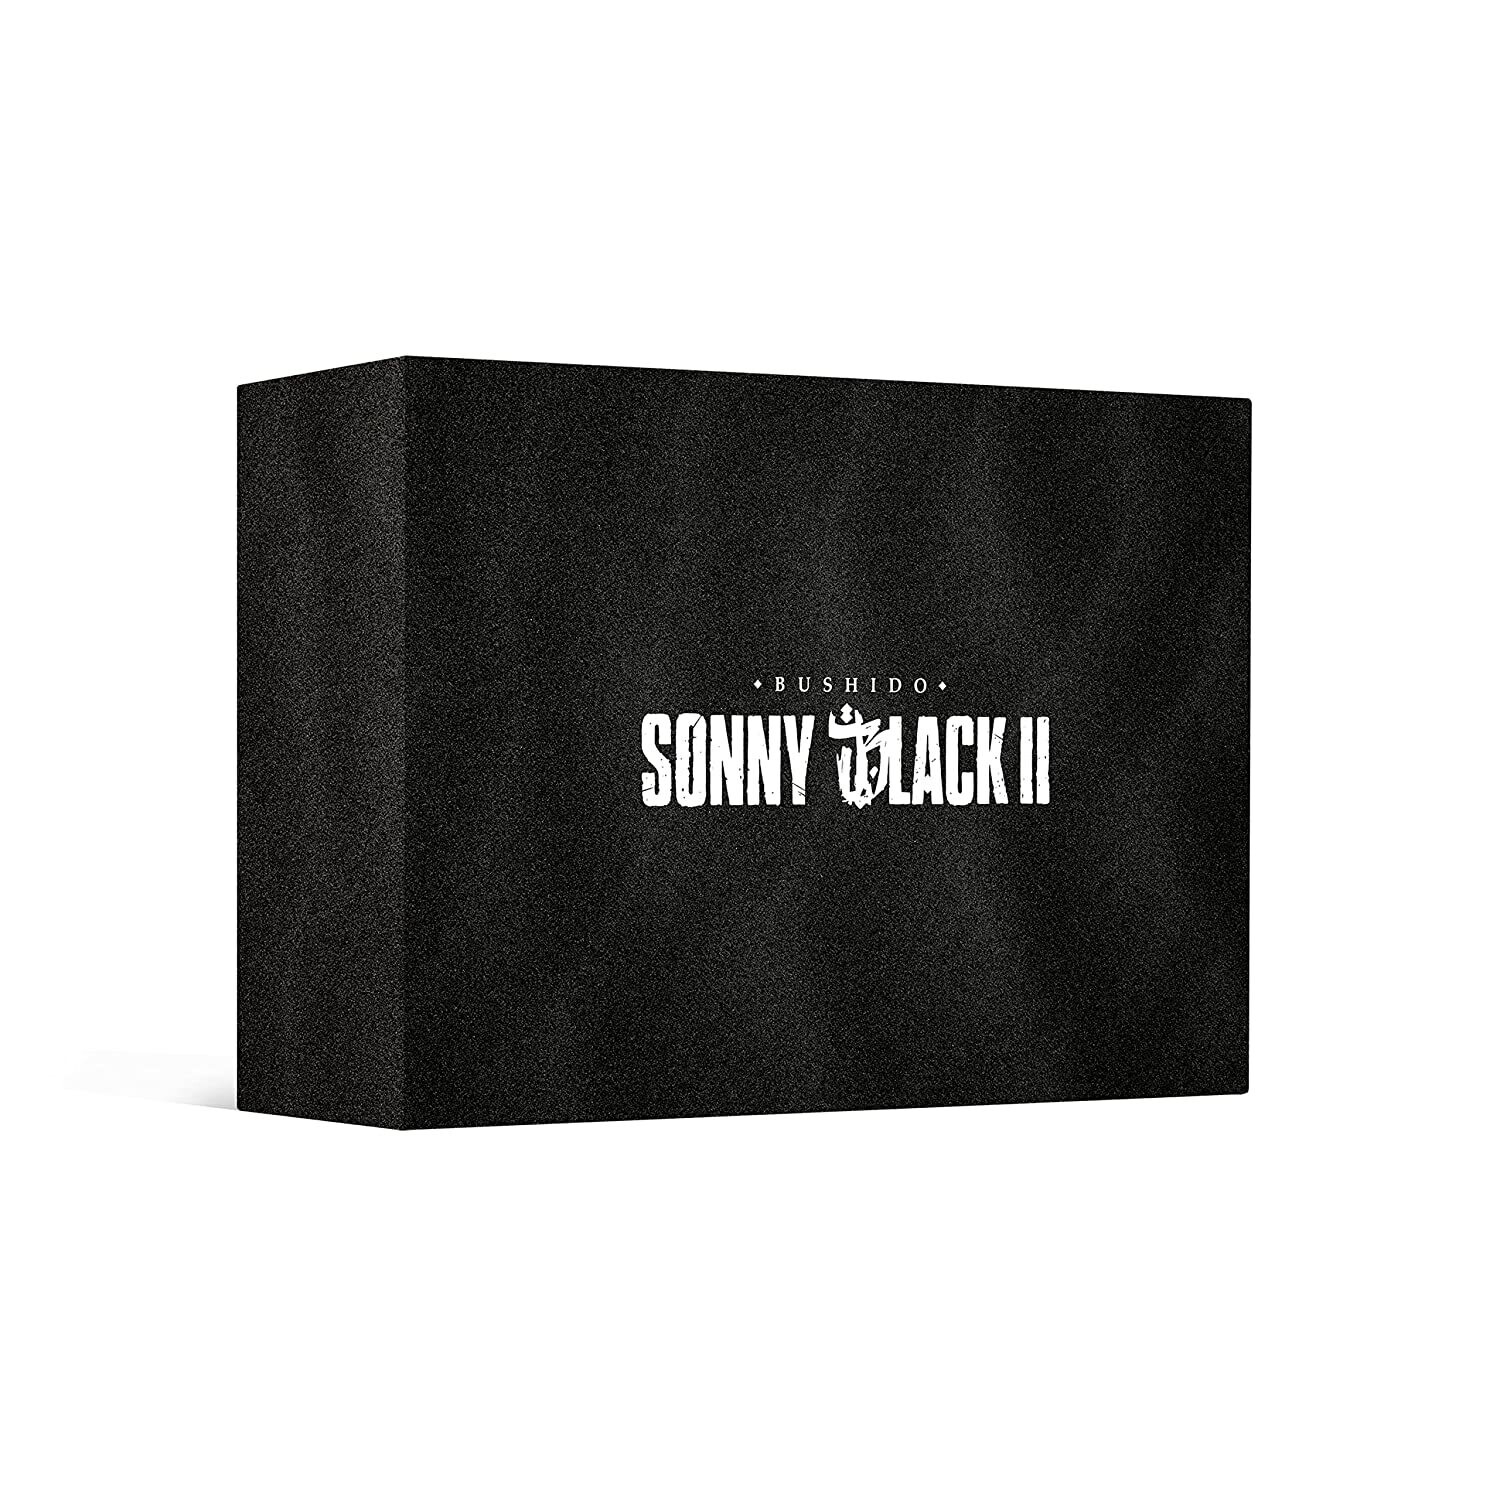 Bushido - Sonny Black 2 (Limited Deluxe Box)(2021) 3CD&Blu-ray